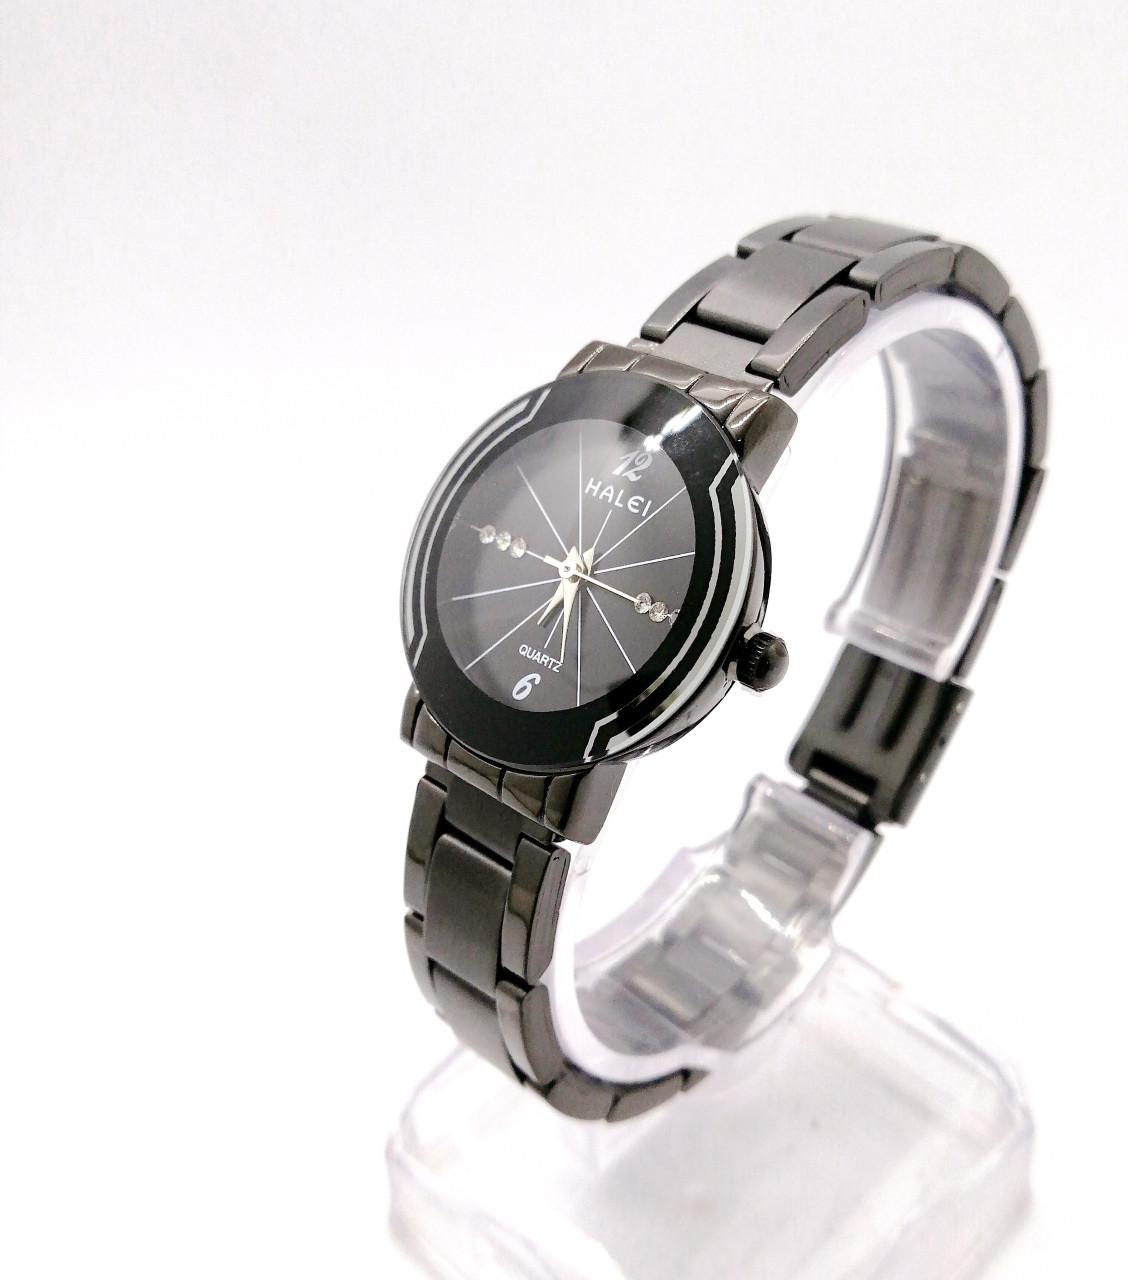 Đồng hồ Nữ Halei  HL457 + Tặng Combo TẨY CHẾT APPLE WHITE PELLING GEL BEAUSKIN chính hãng